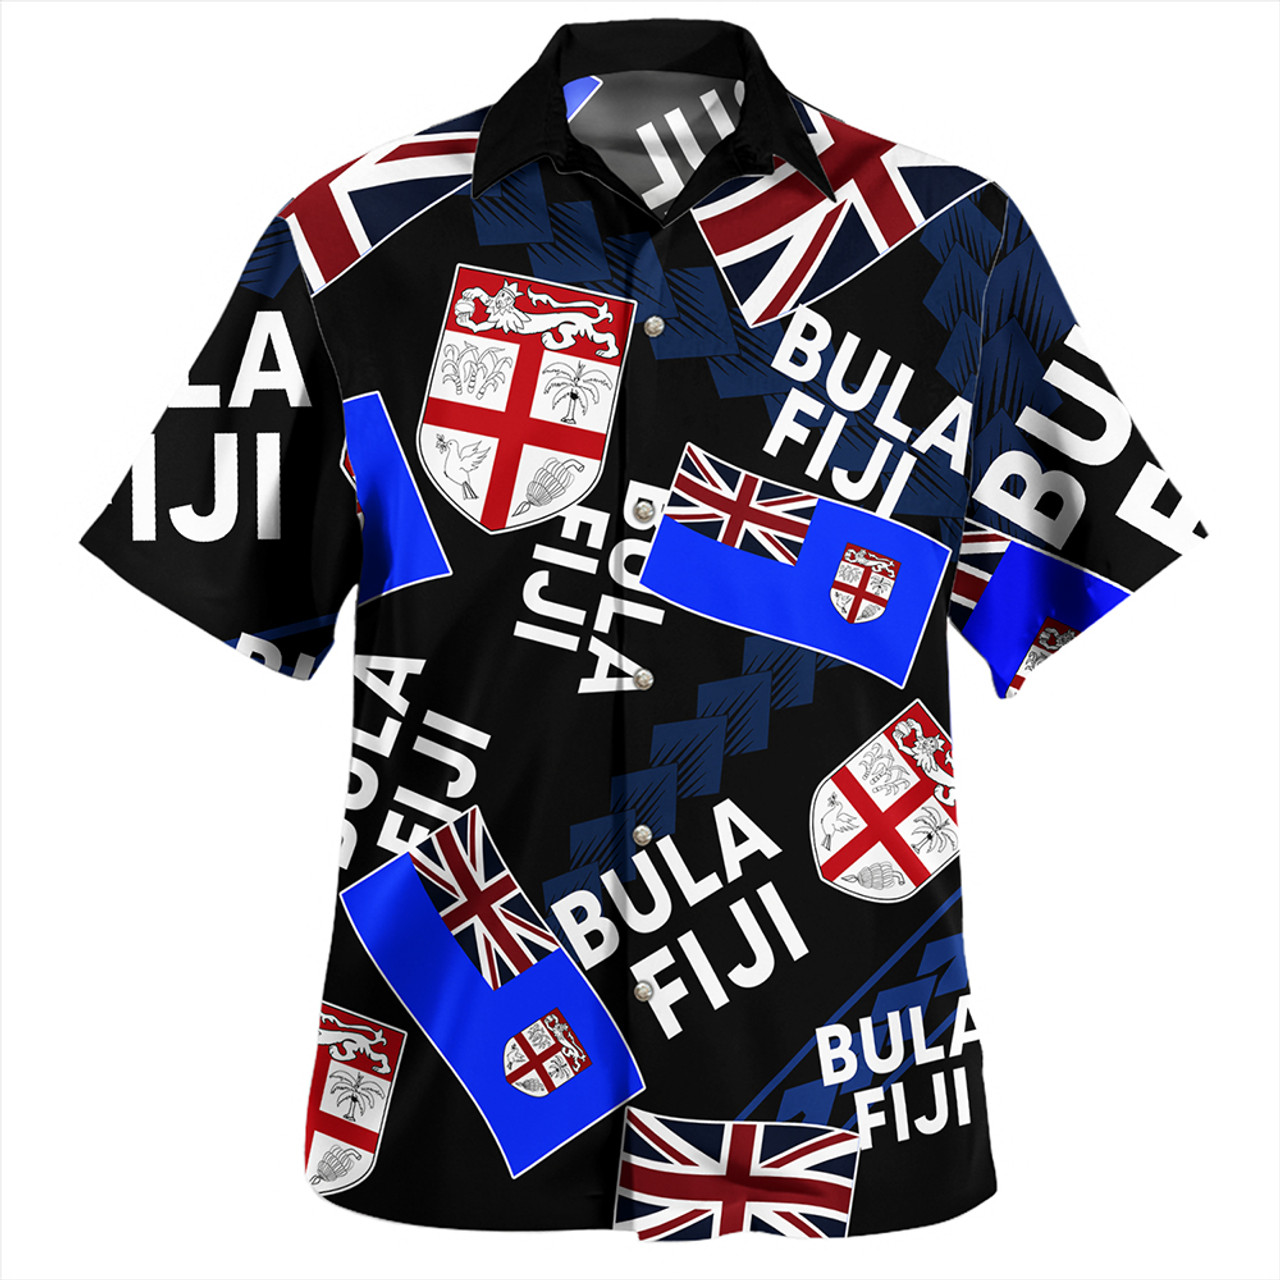 Fiji Hawaiian Shirt Flag Outfit Free Style